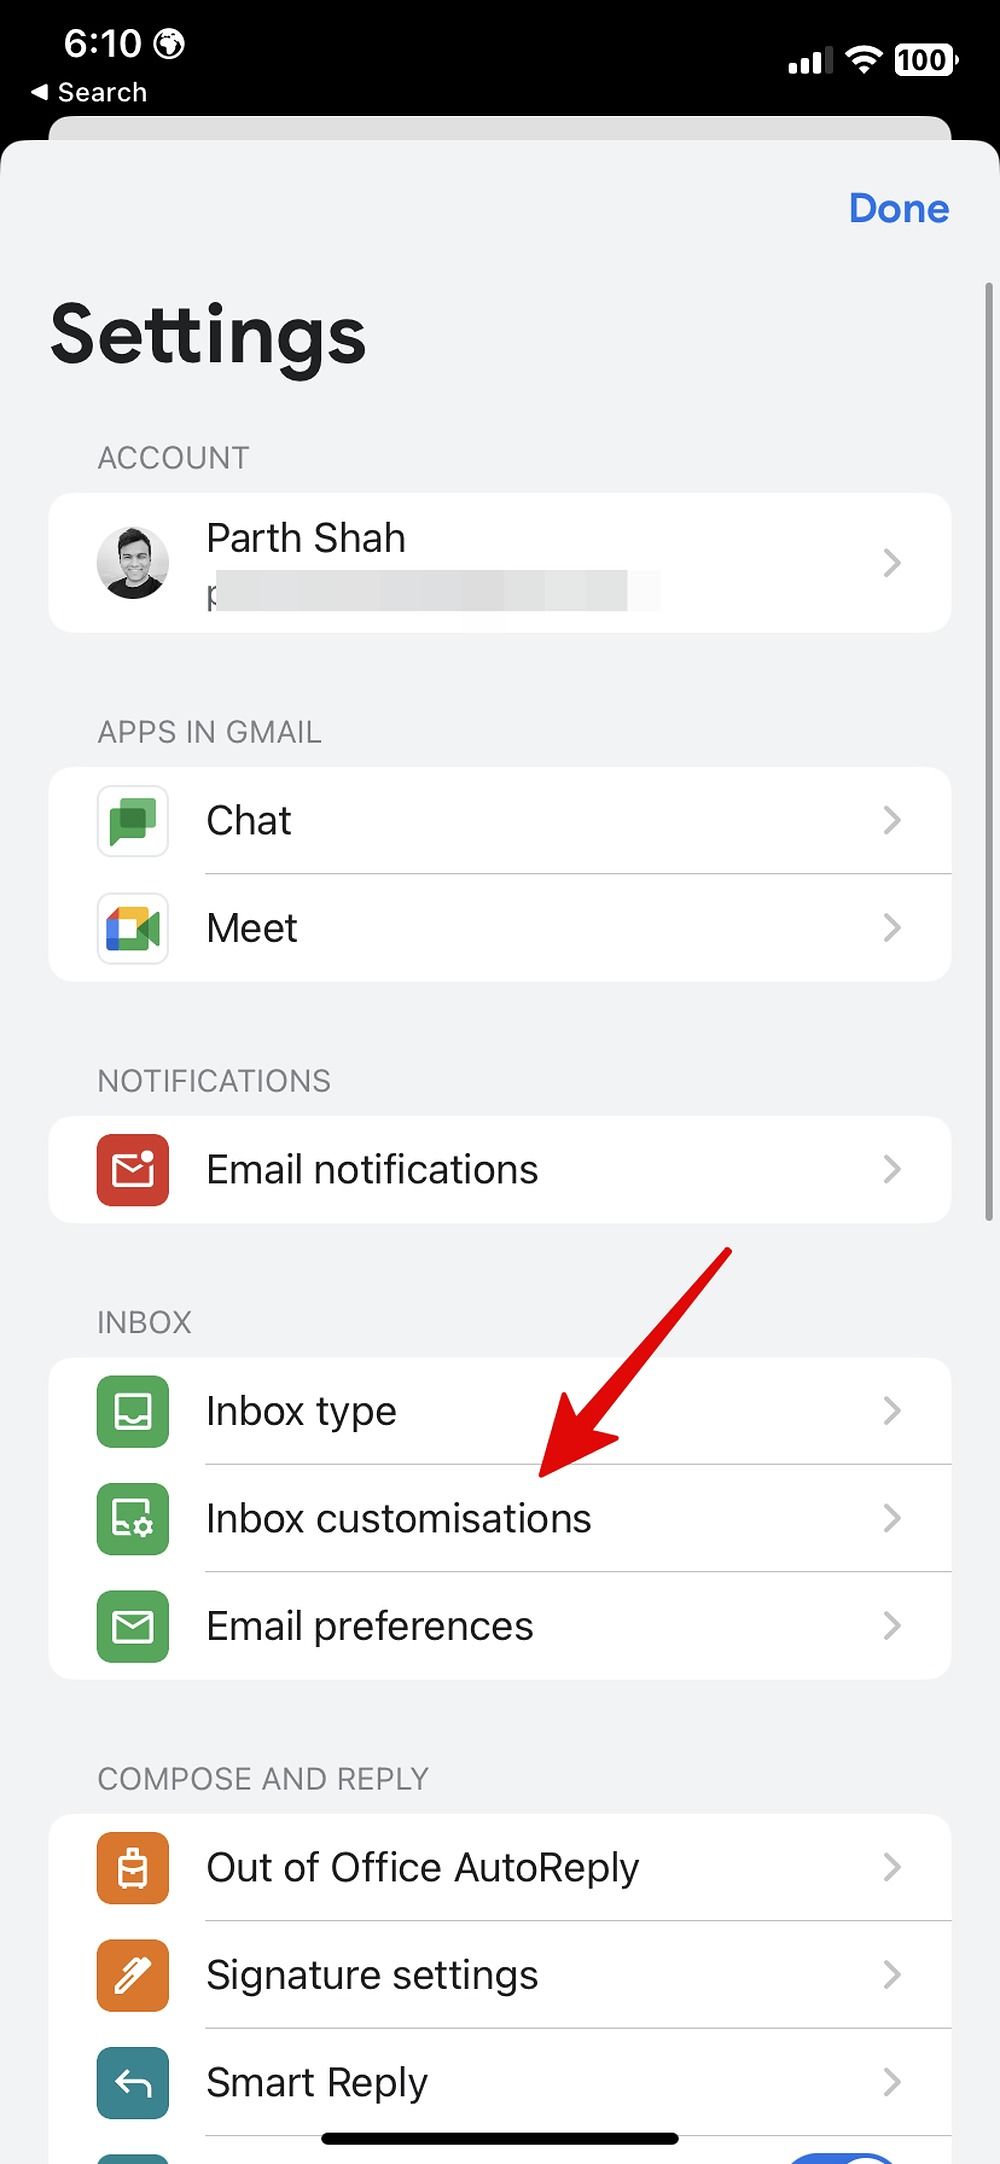 Select Inbox customizations